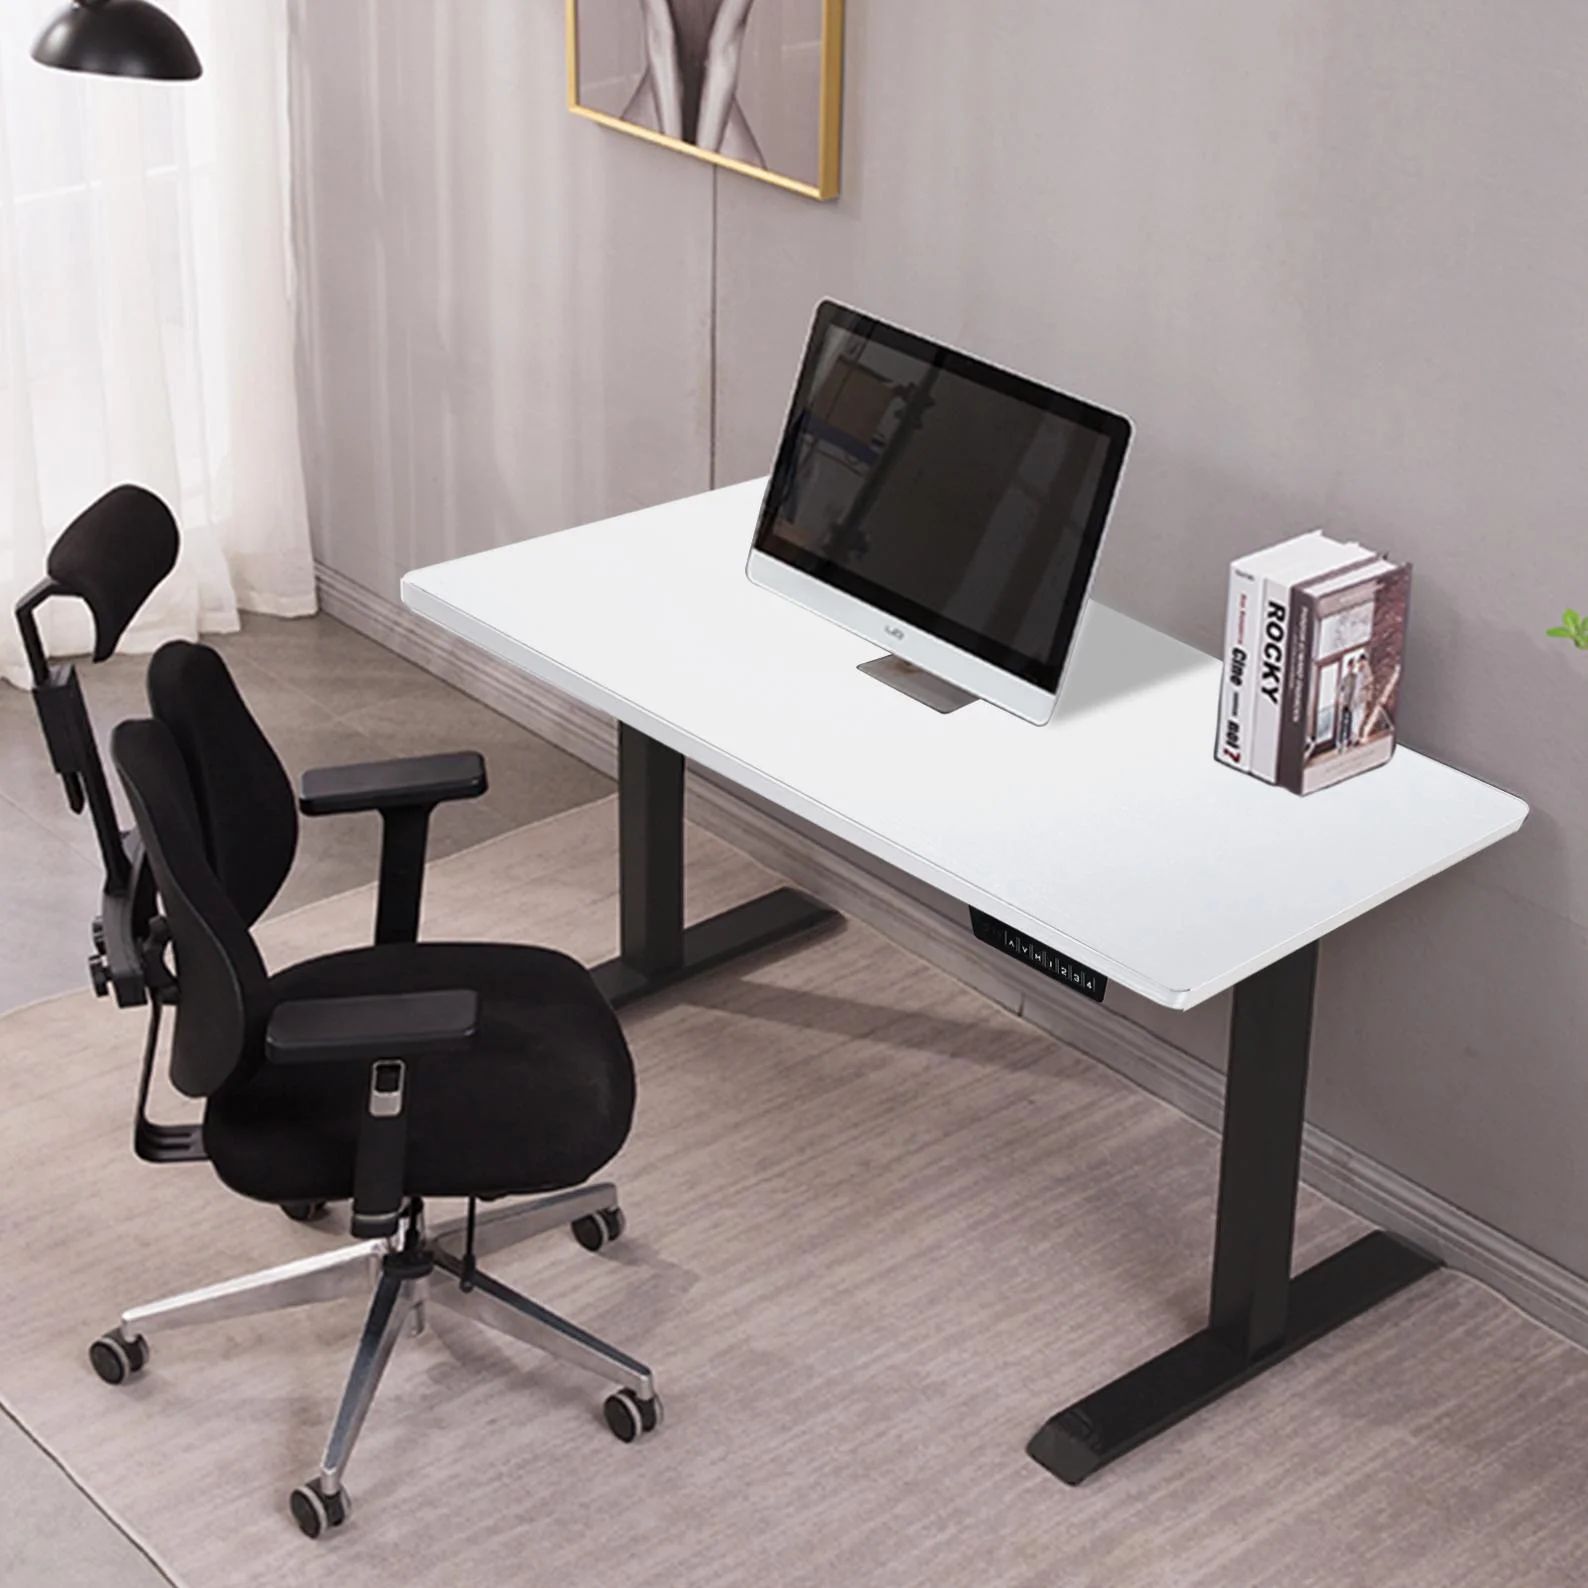 47" Home Office Computer Desk ,White | Walmart (US)